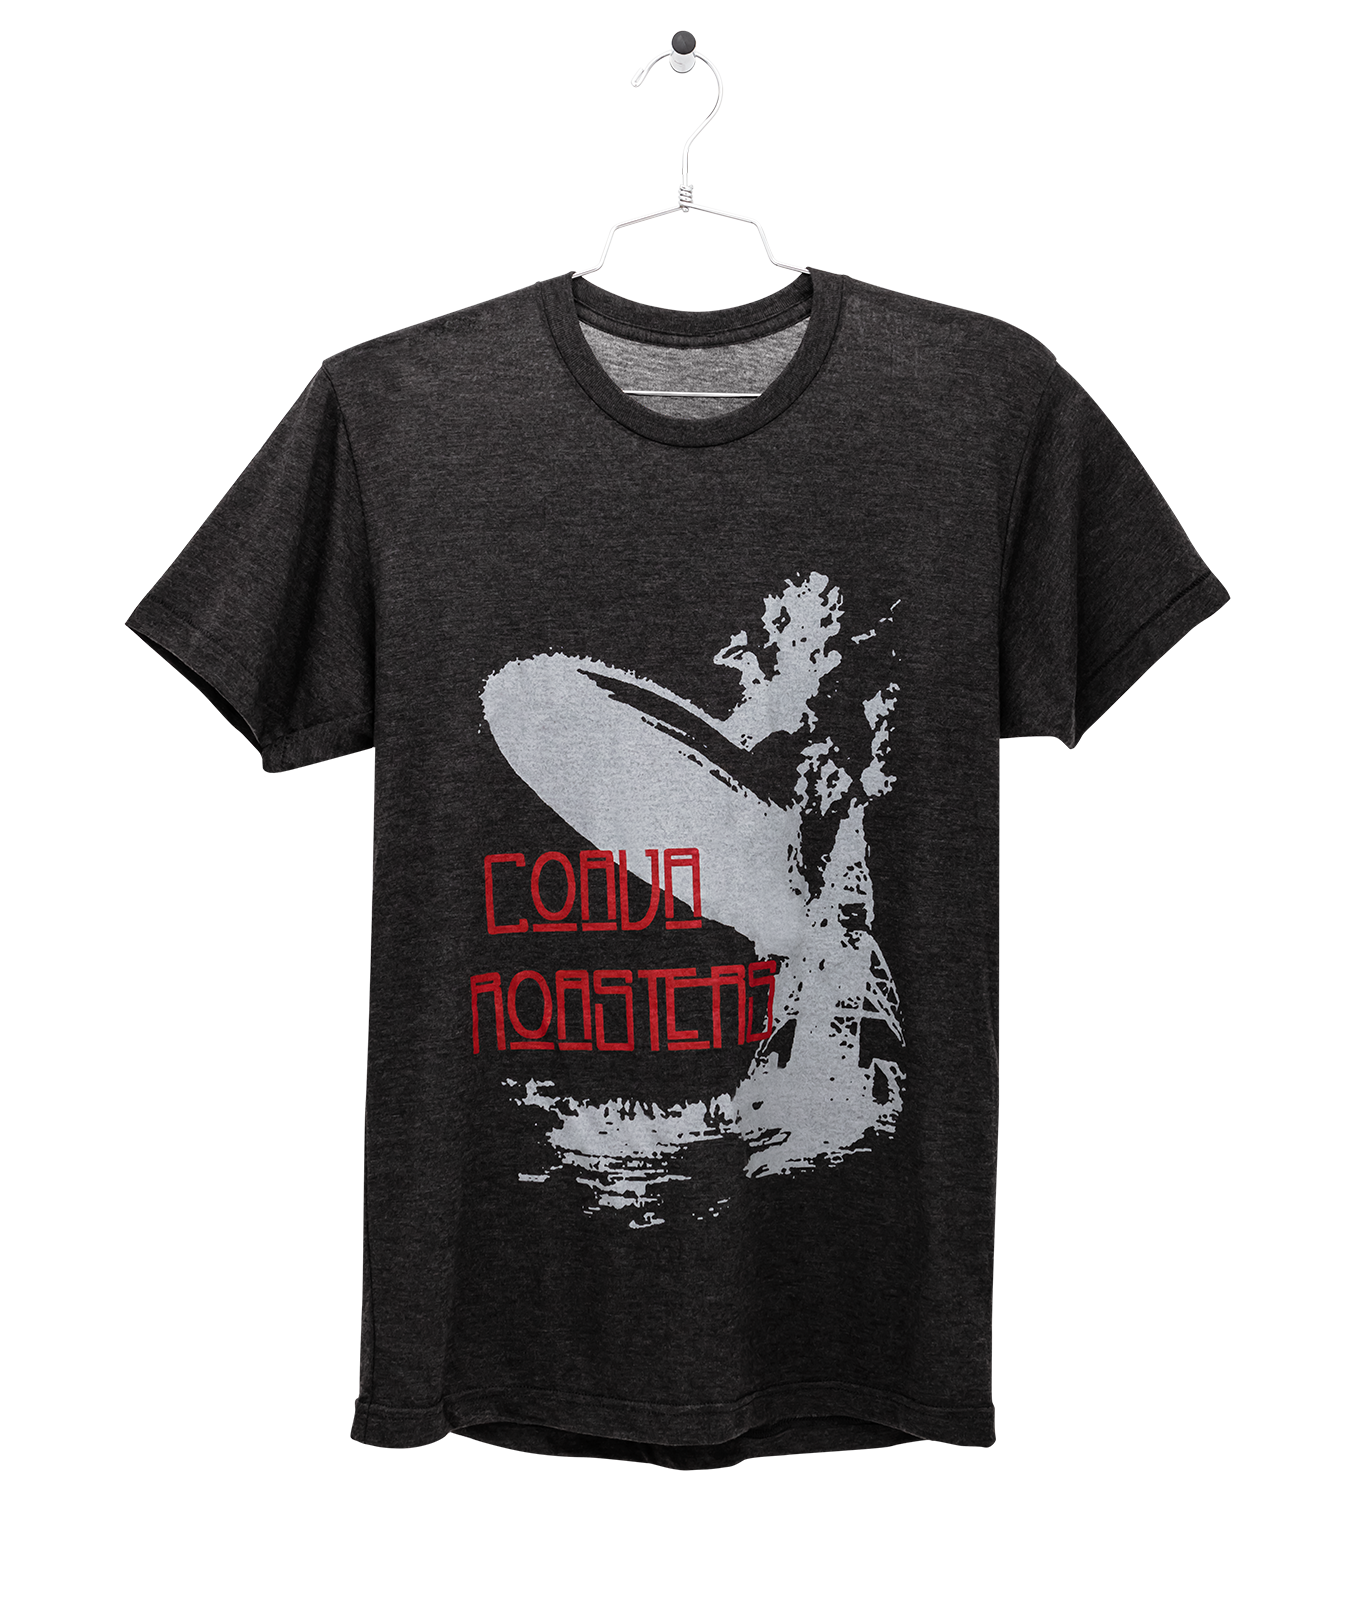 Coava Zeppelin T-Shirt